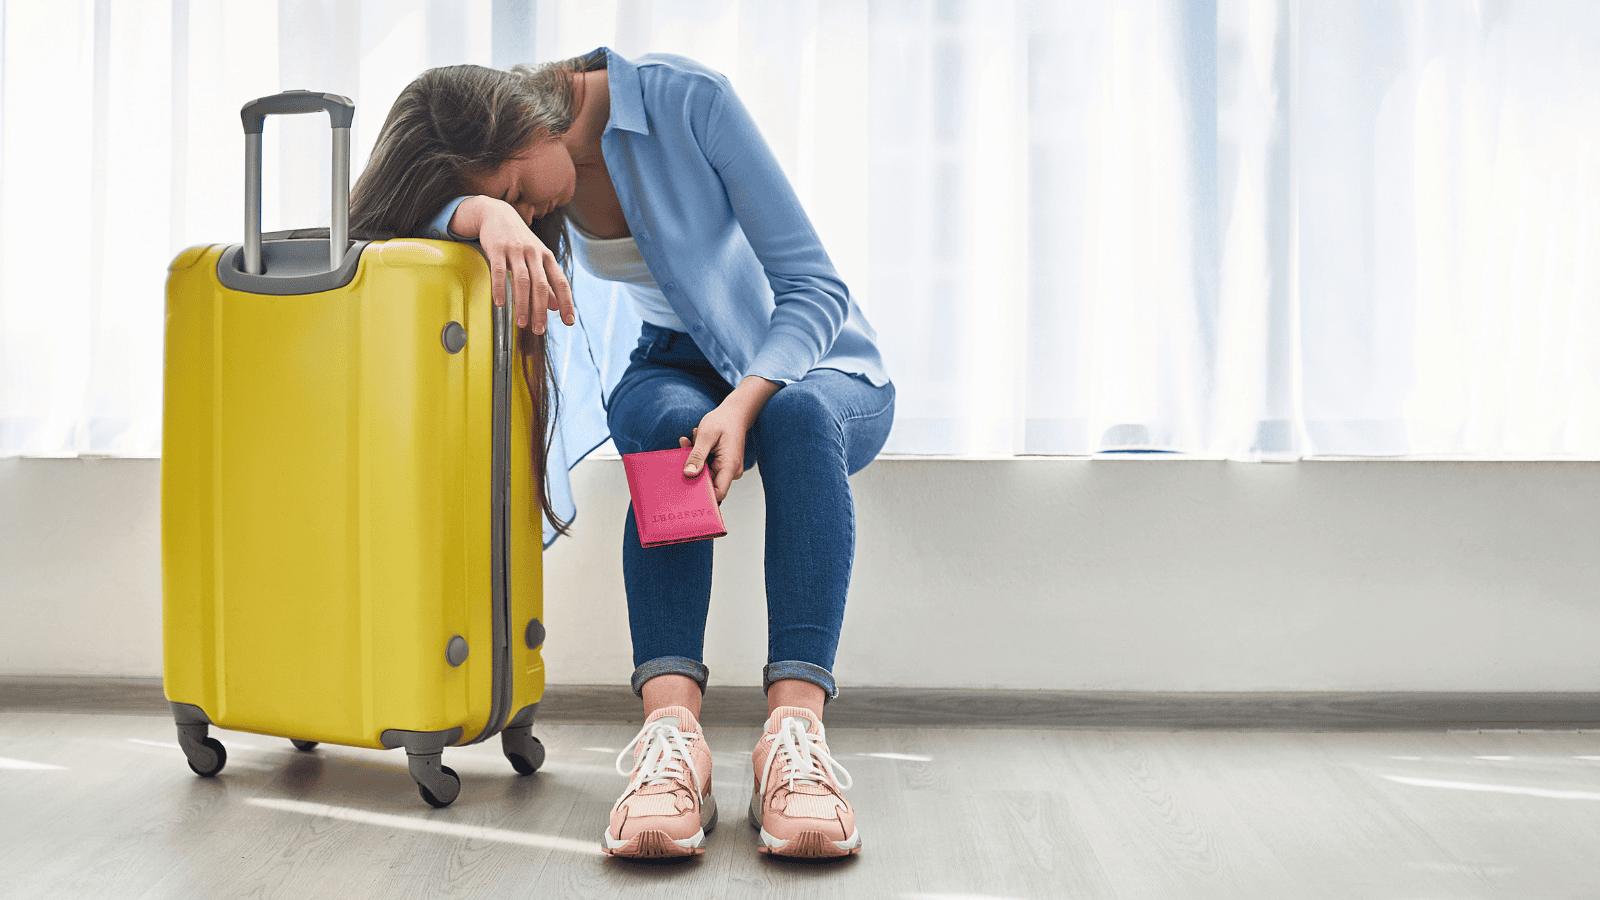 Genius ways to avoid common travel mistakes